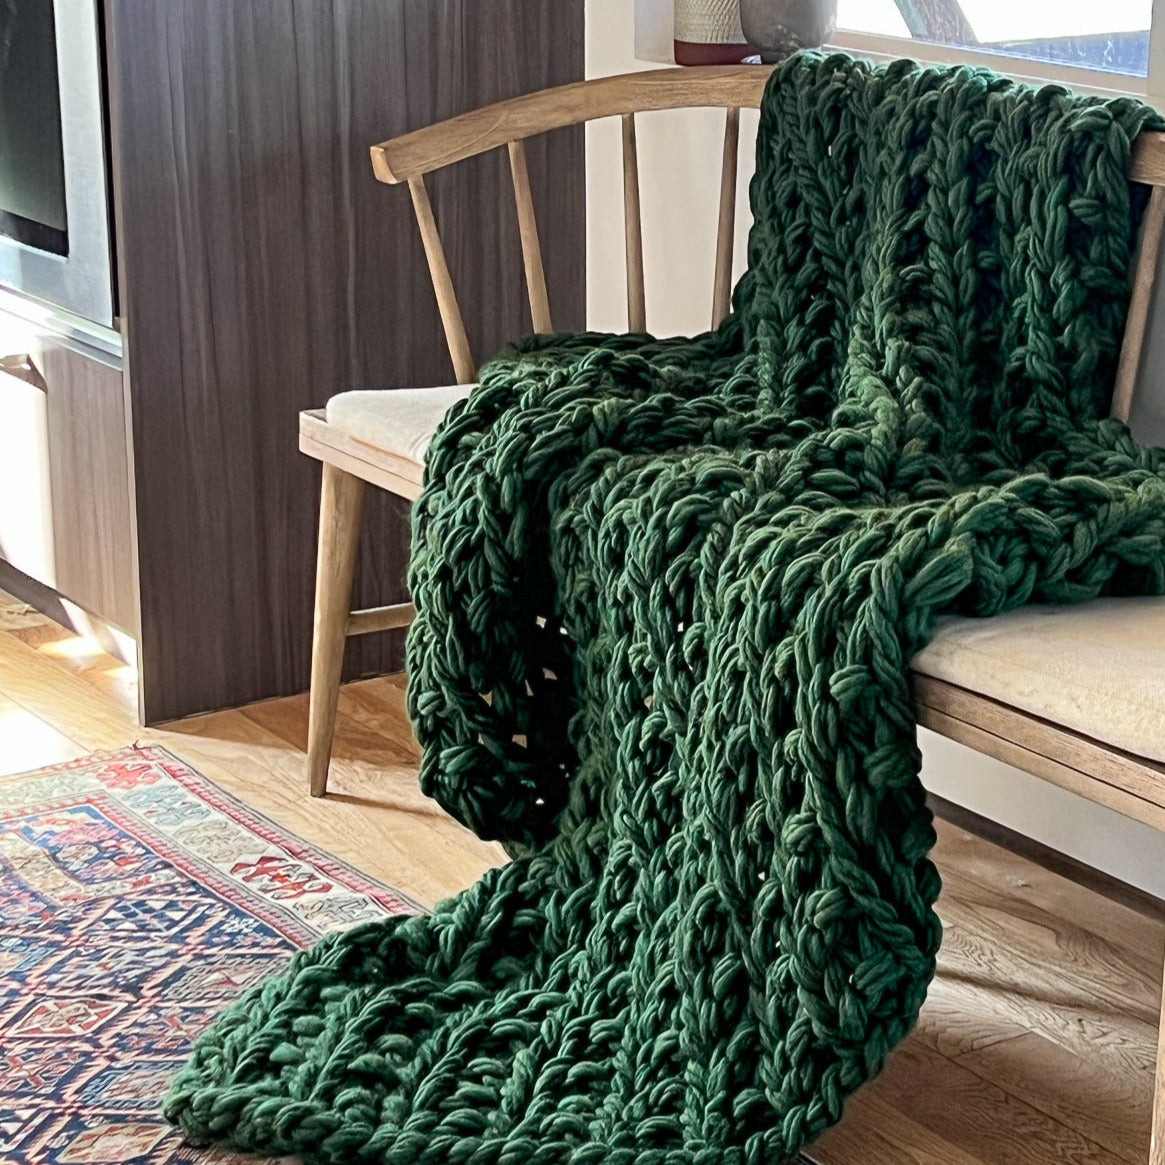 Alternate Rib Arm Knit Blanket Pattern with Video